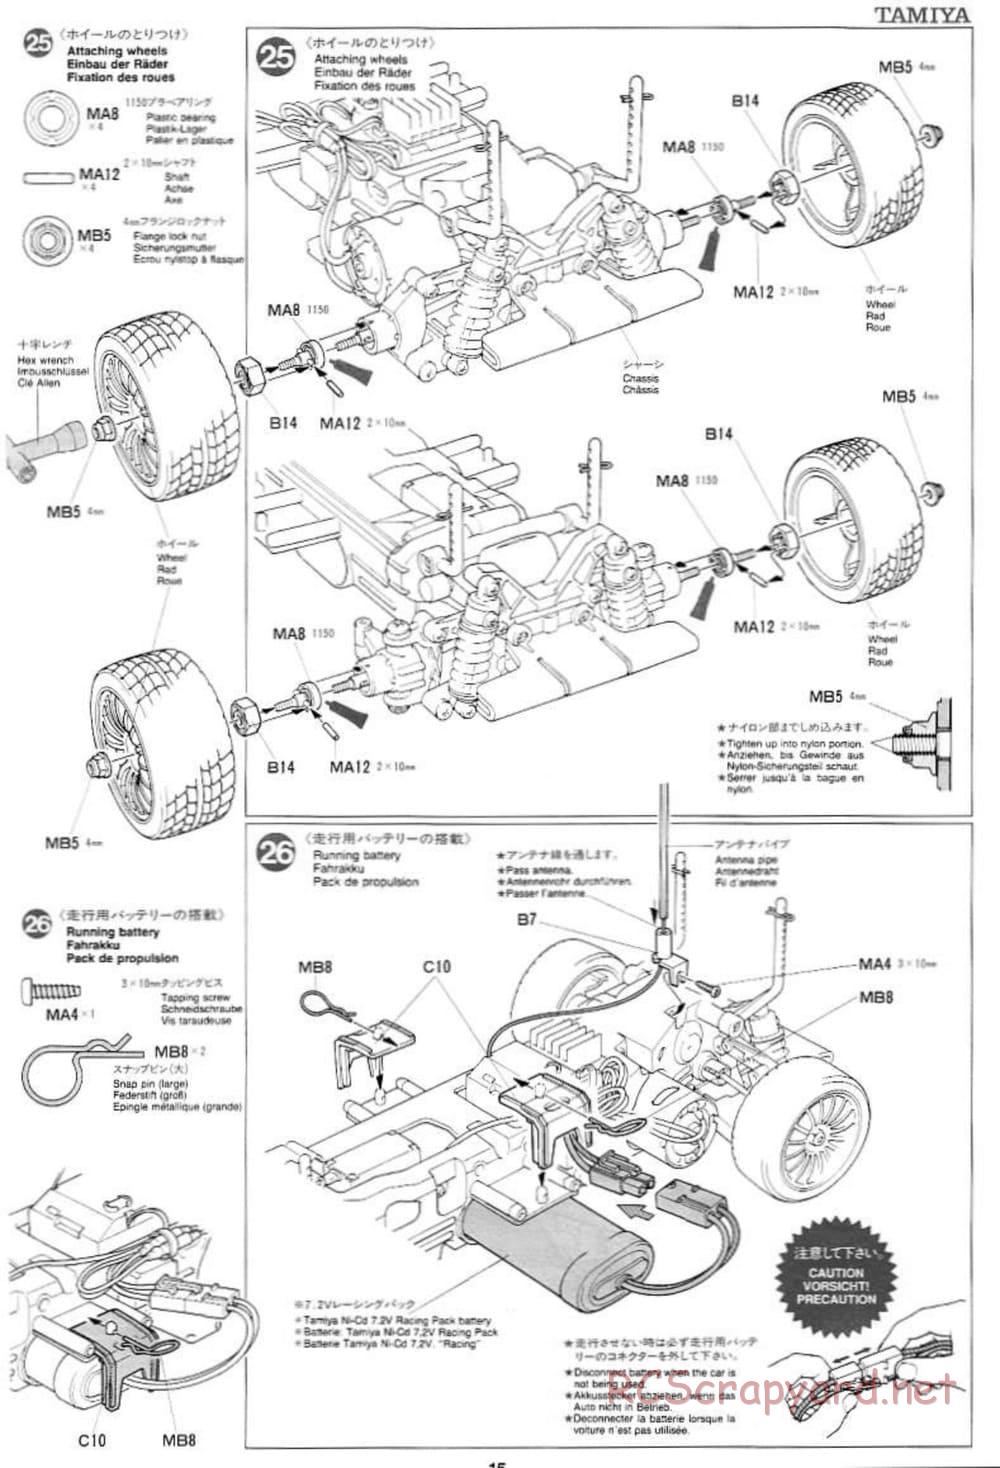 Tamiya - Ford Escort WRC - TL-01 Chassis - Manual - Page 15